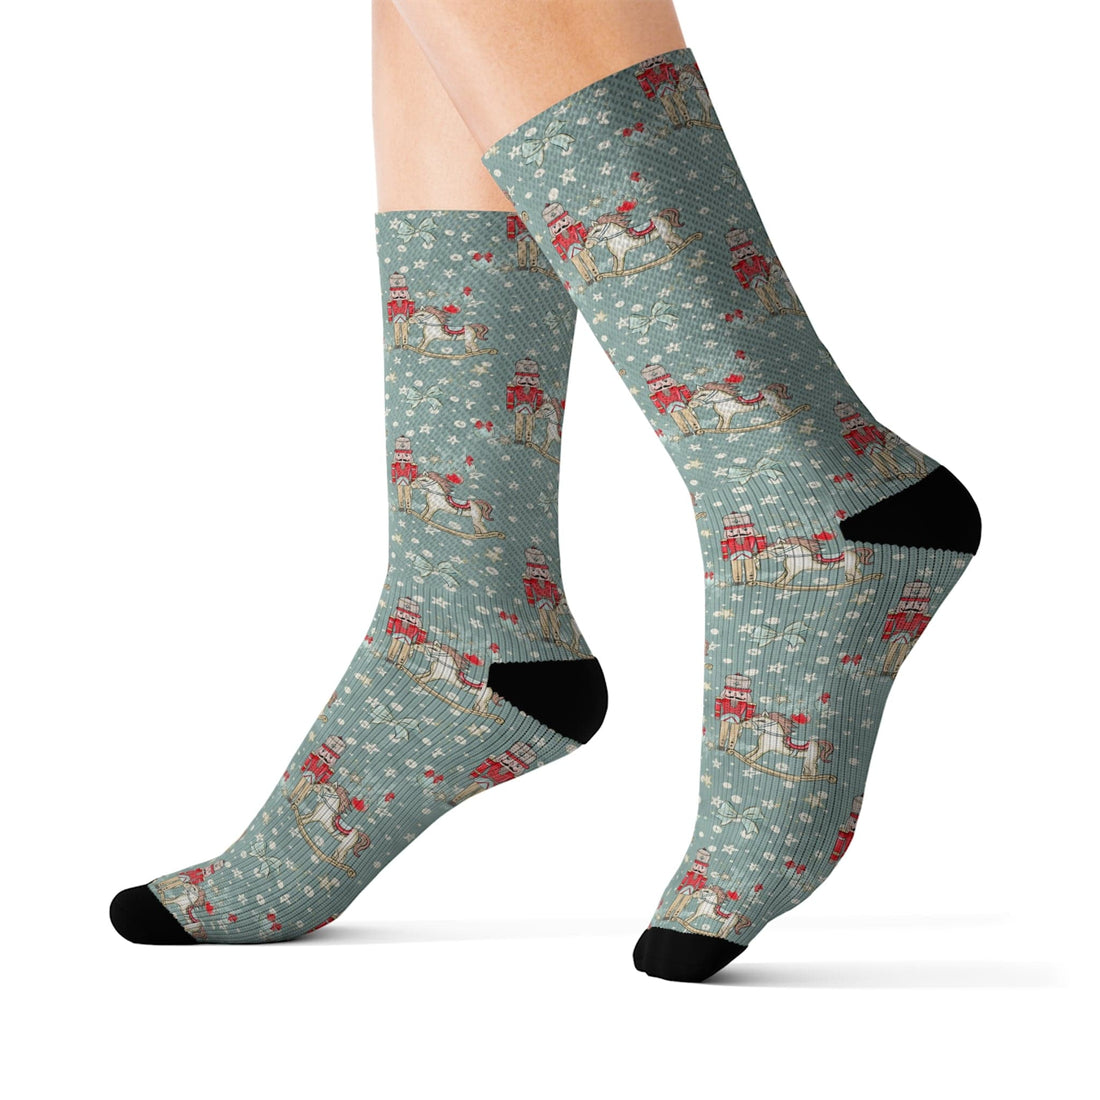 Kate McEnroe New York Festive Nutcracker Christmas Socks: Cozy Crew Length with Fleece Lining - Perfect for Men and Women, Holiday Gifts, Stocking StuffersSocks10322468349826018492